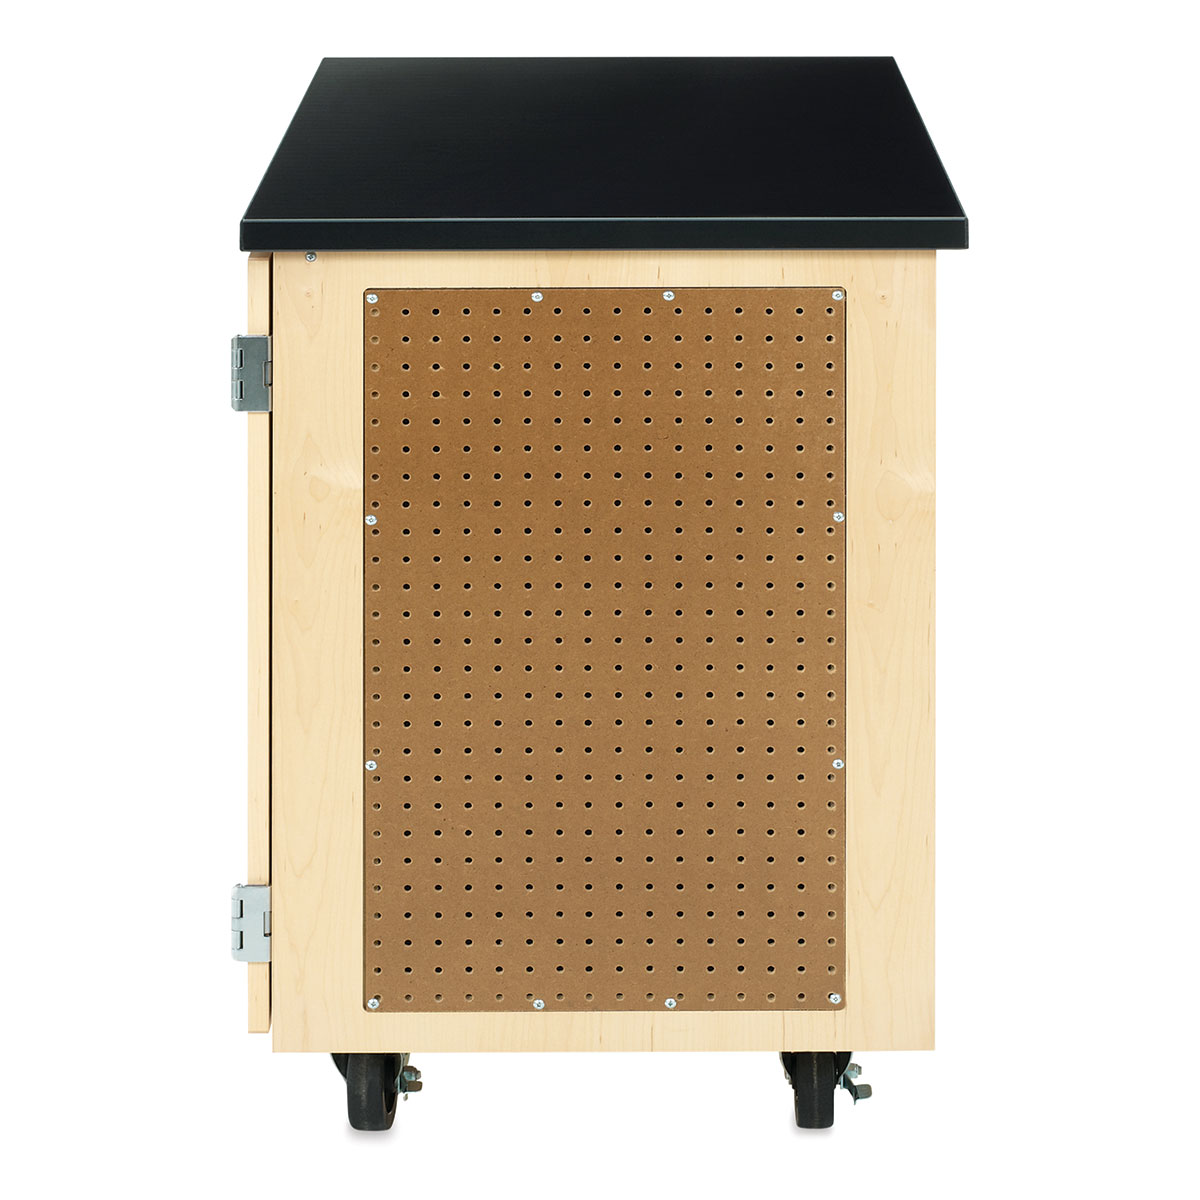 Diversified Spaces General Storage Cabinet:Furniture:Storage